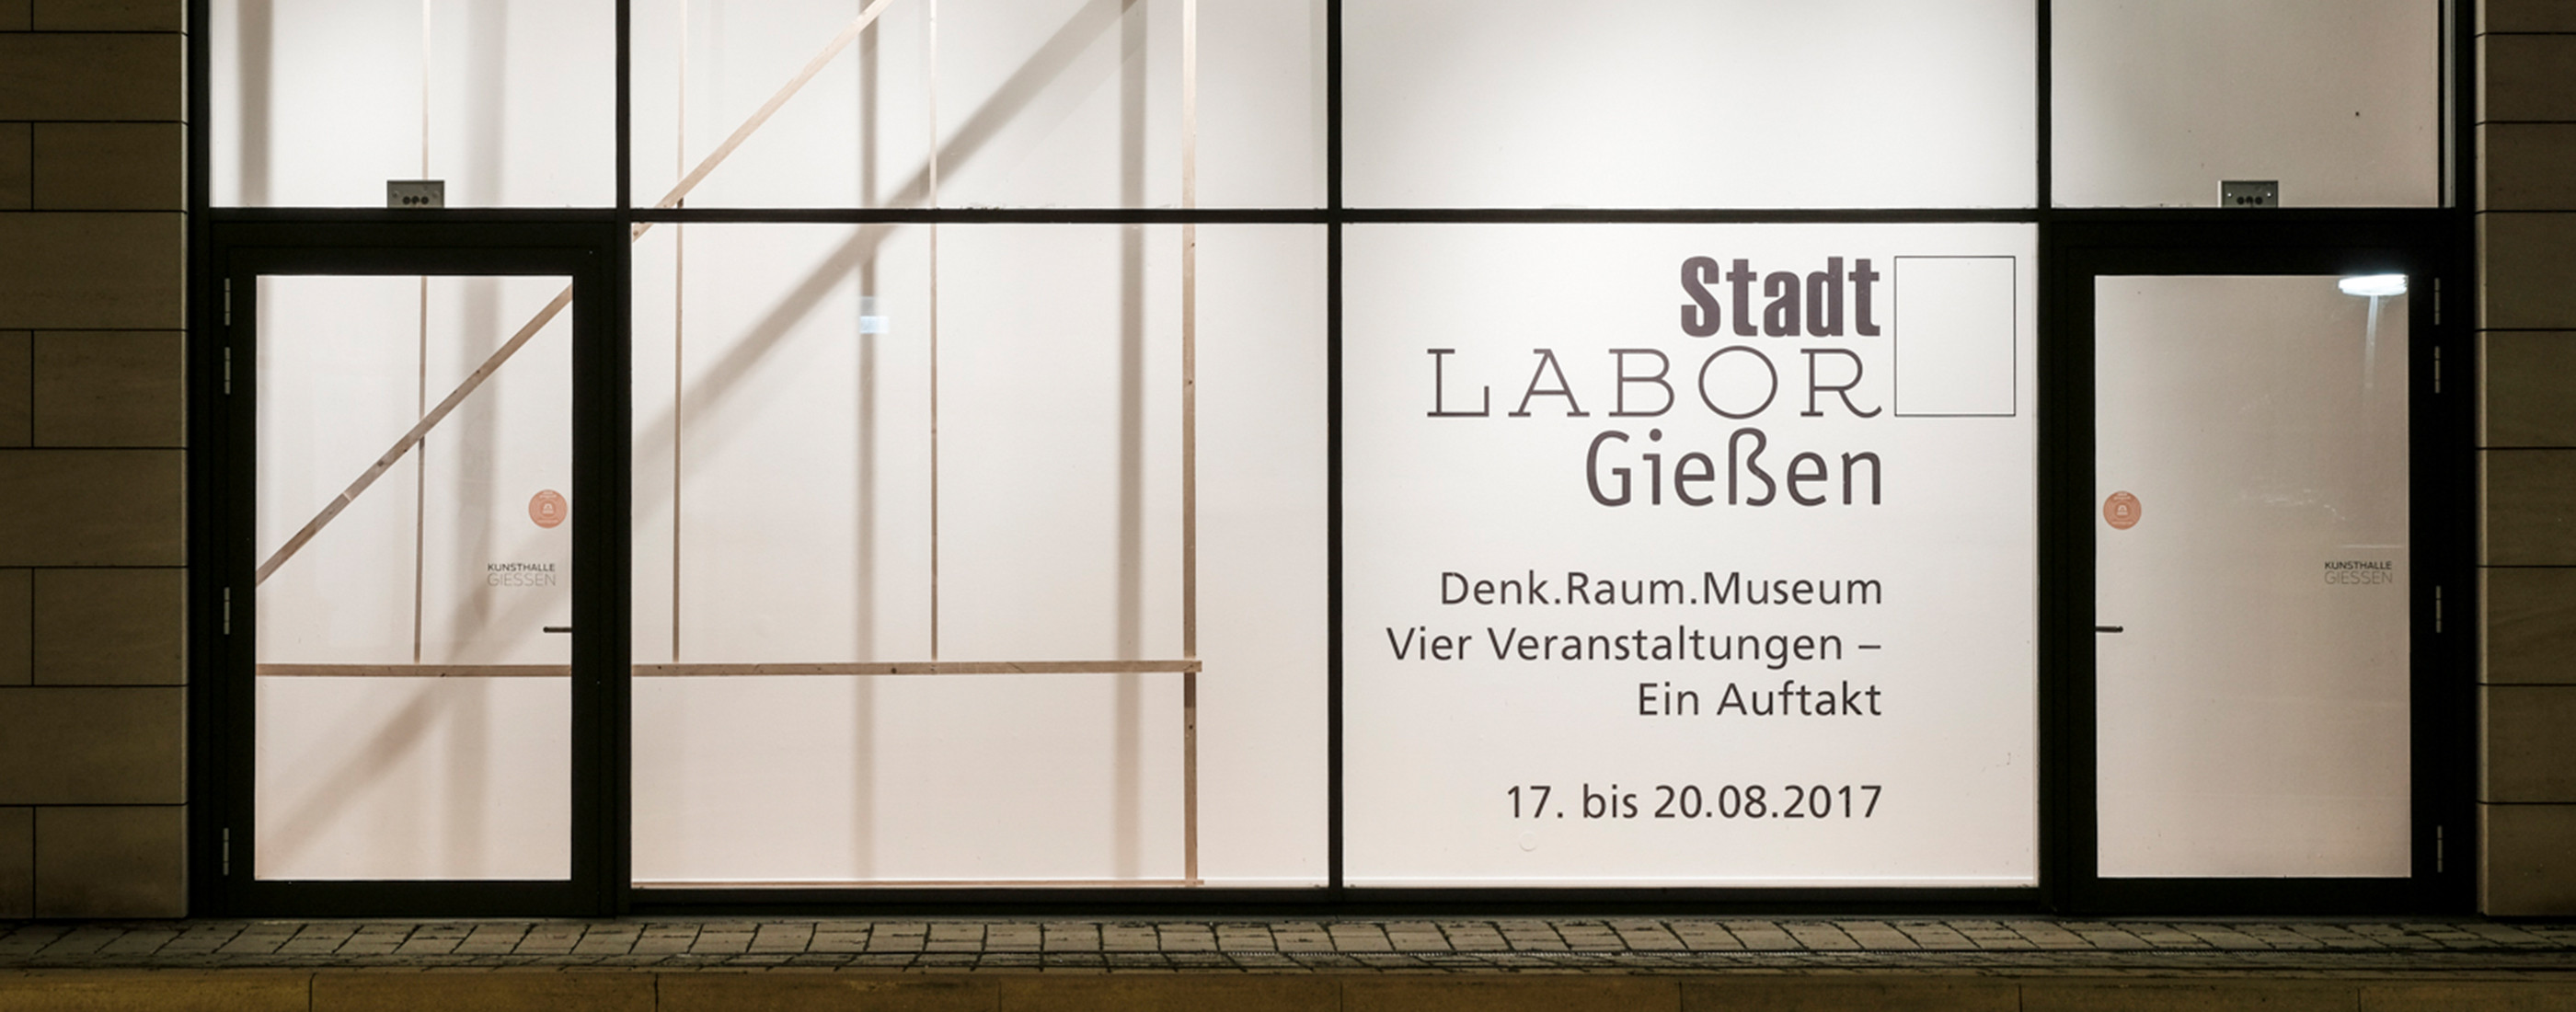 Stadtlabor_Giessen_header